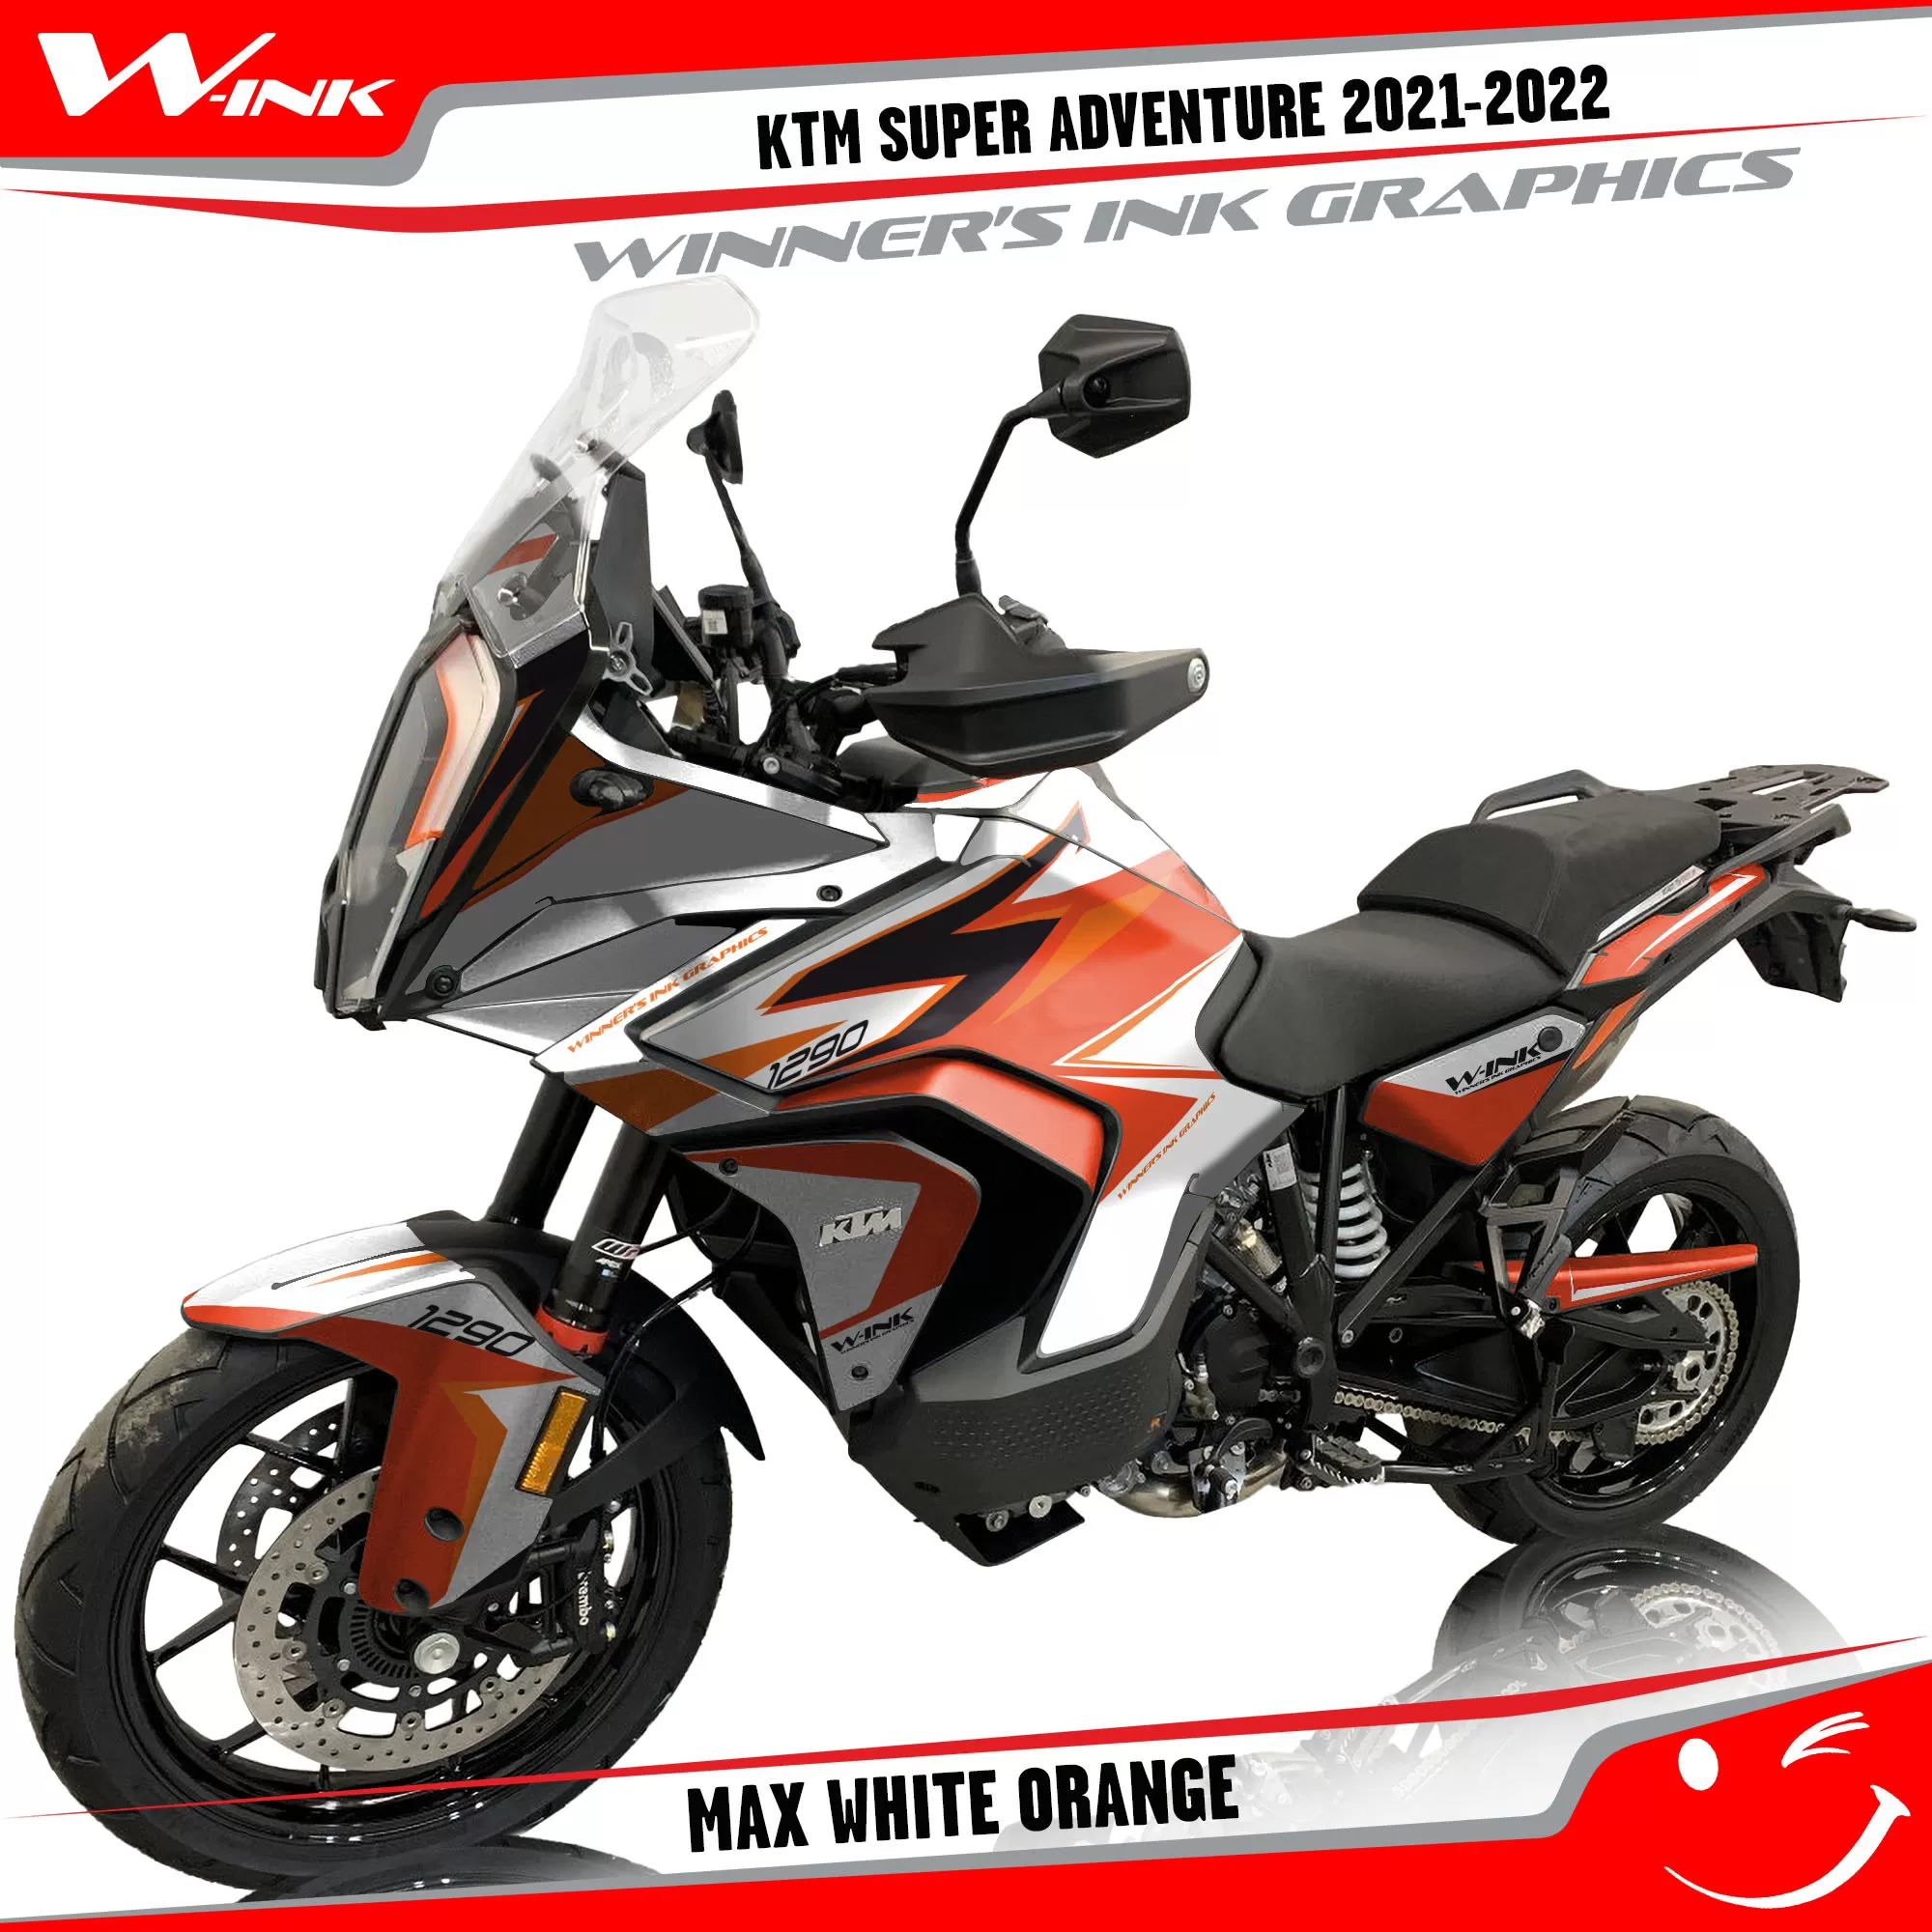 KTM-Super-Adventure-S-2021-2022-graphics-kit-and-decals-with-designs-Max-White-Orange